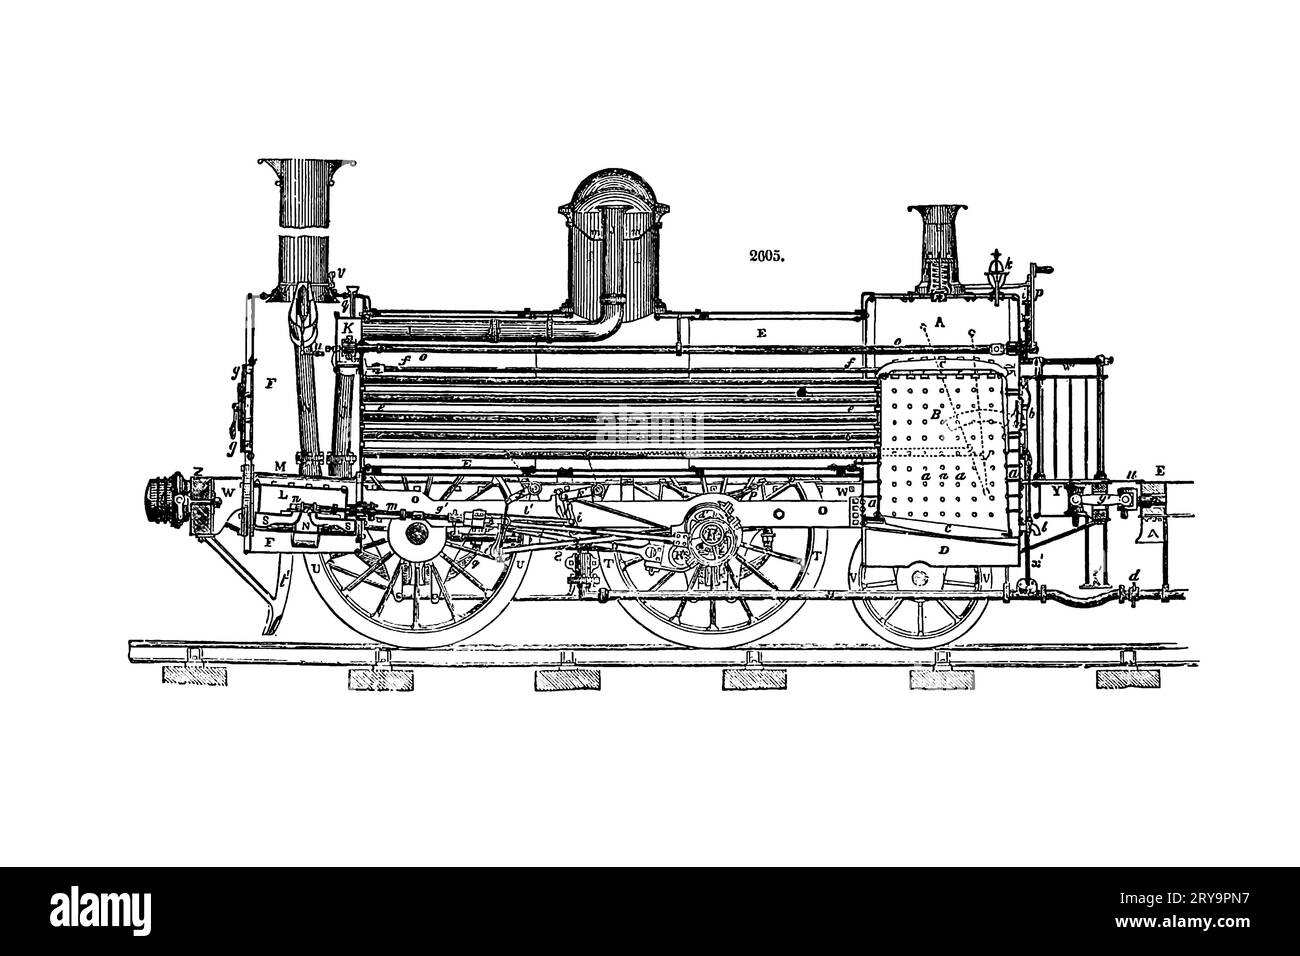 Locomotive engine, illustration Stock Photo